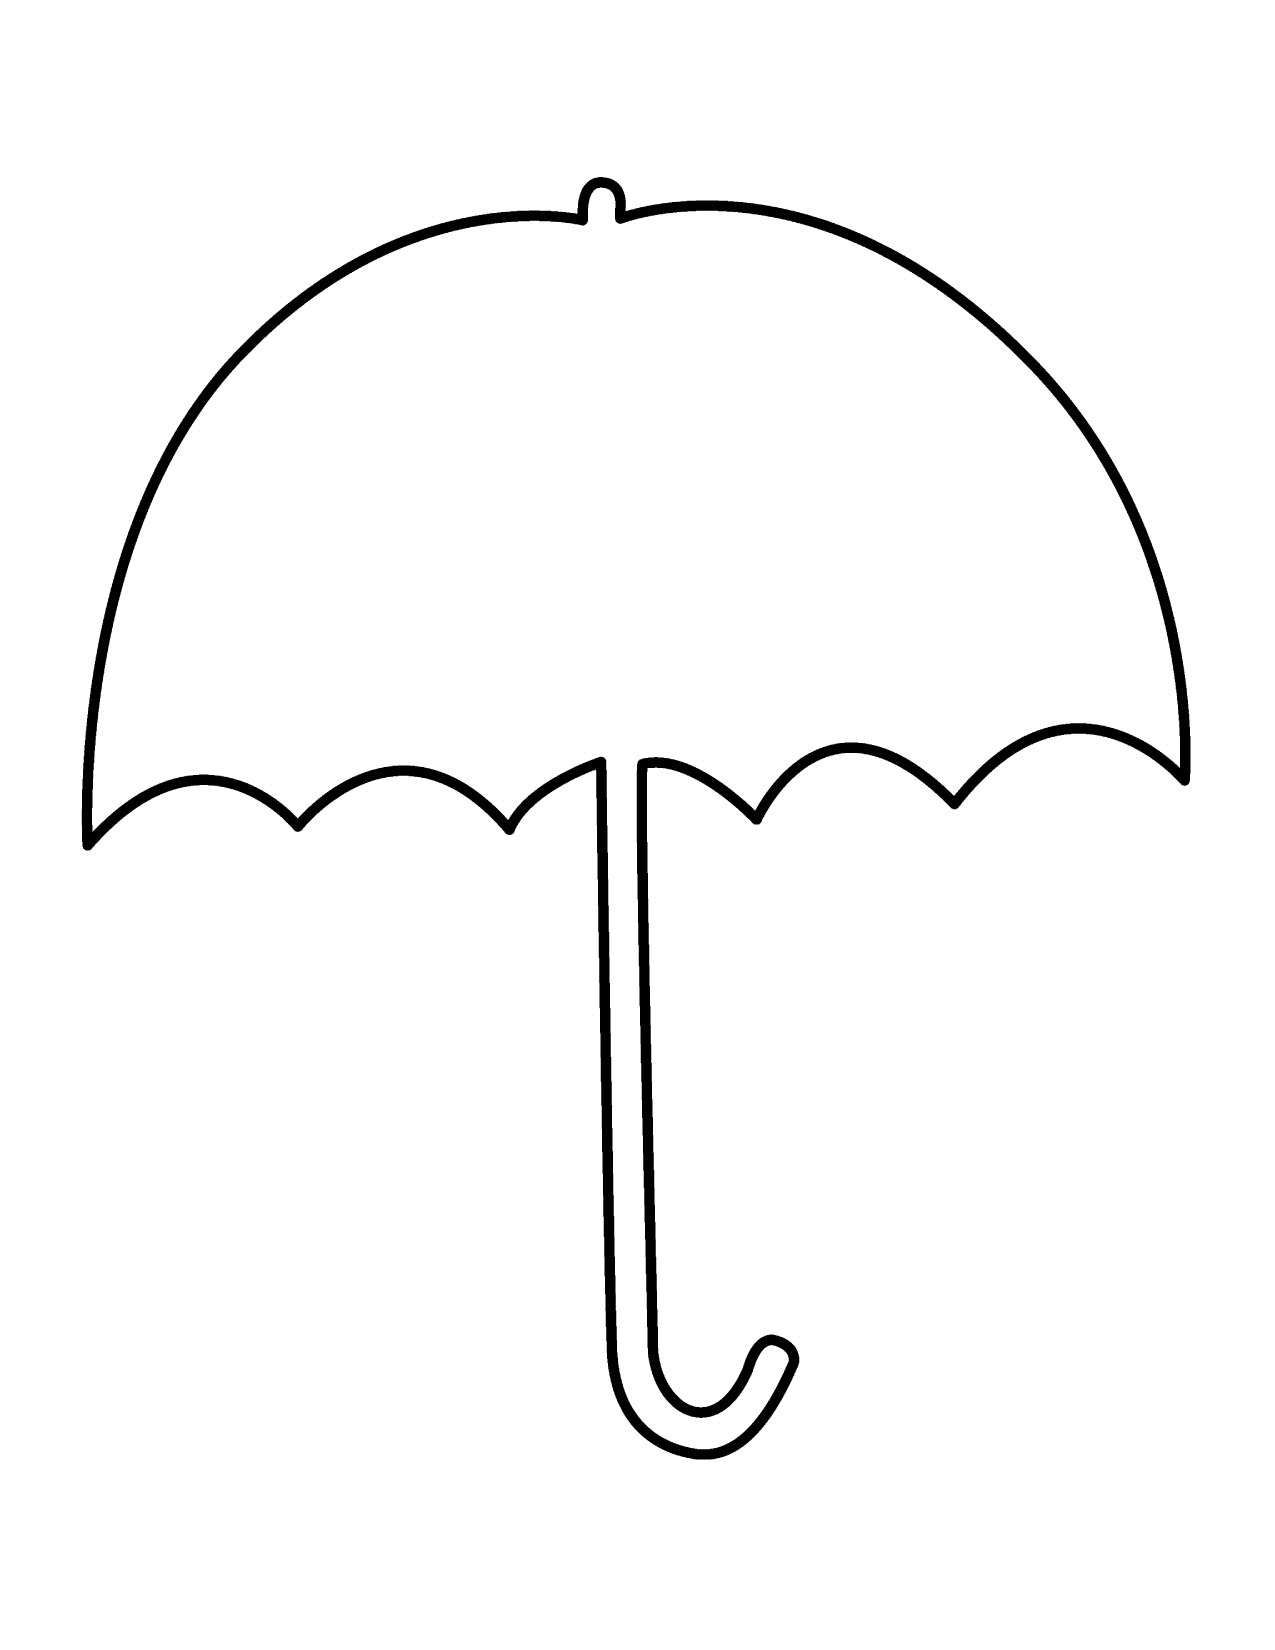 Free Printable Umbrella Template, Download Free Printable Umbrella  With Regard To Blank Umbrella Template